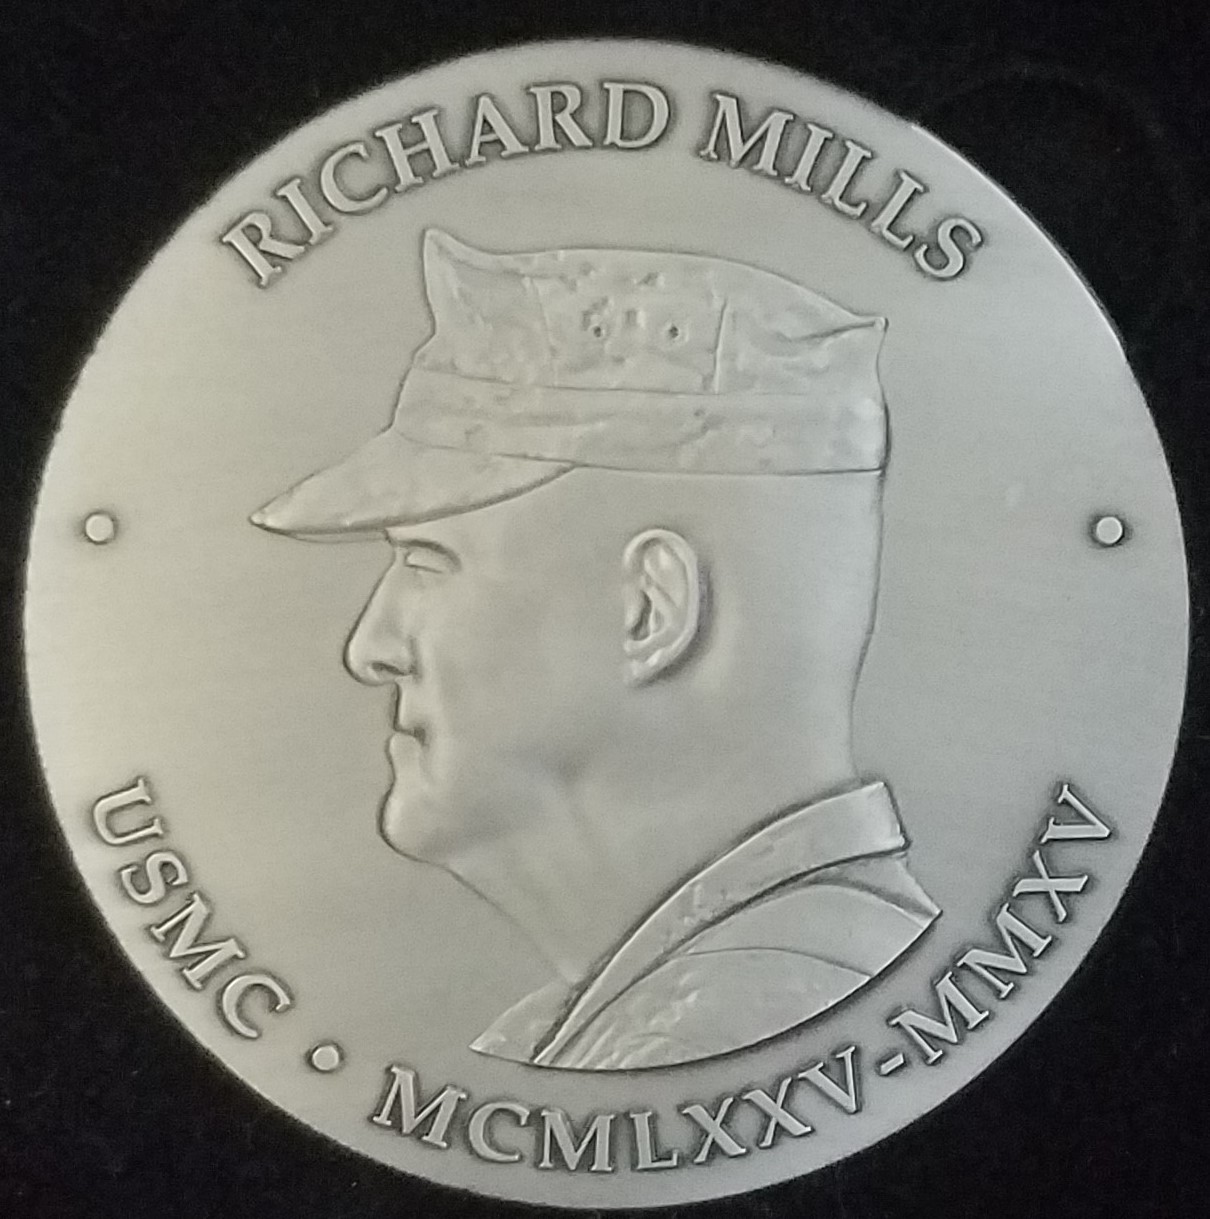 The Mills Medal (Medallion front image)